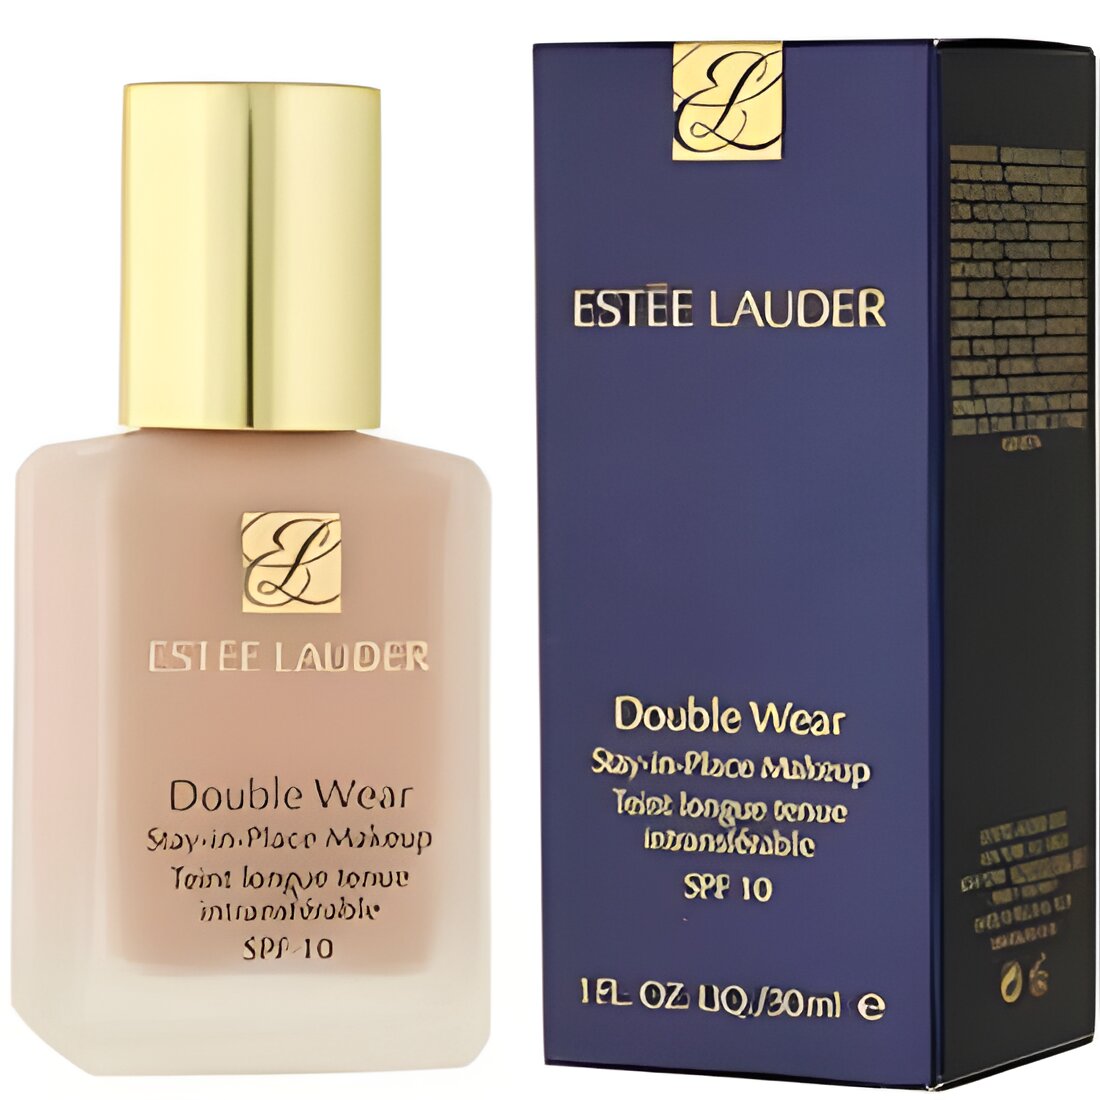 Free Estee Lauder Double Wear Foundation